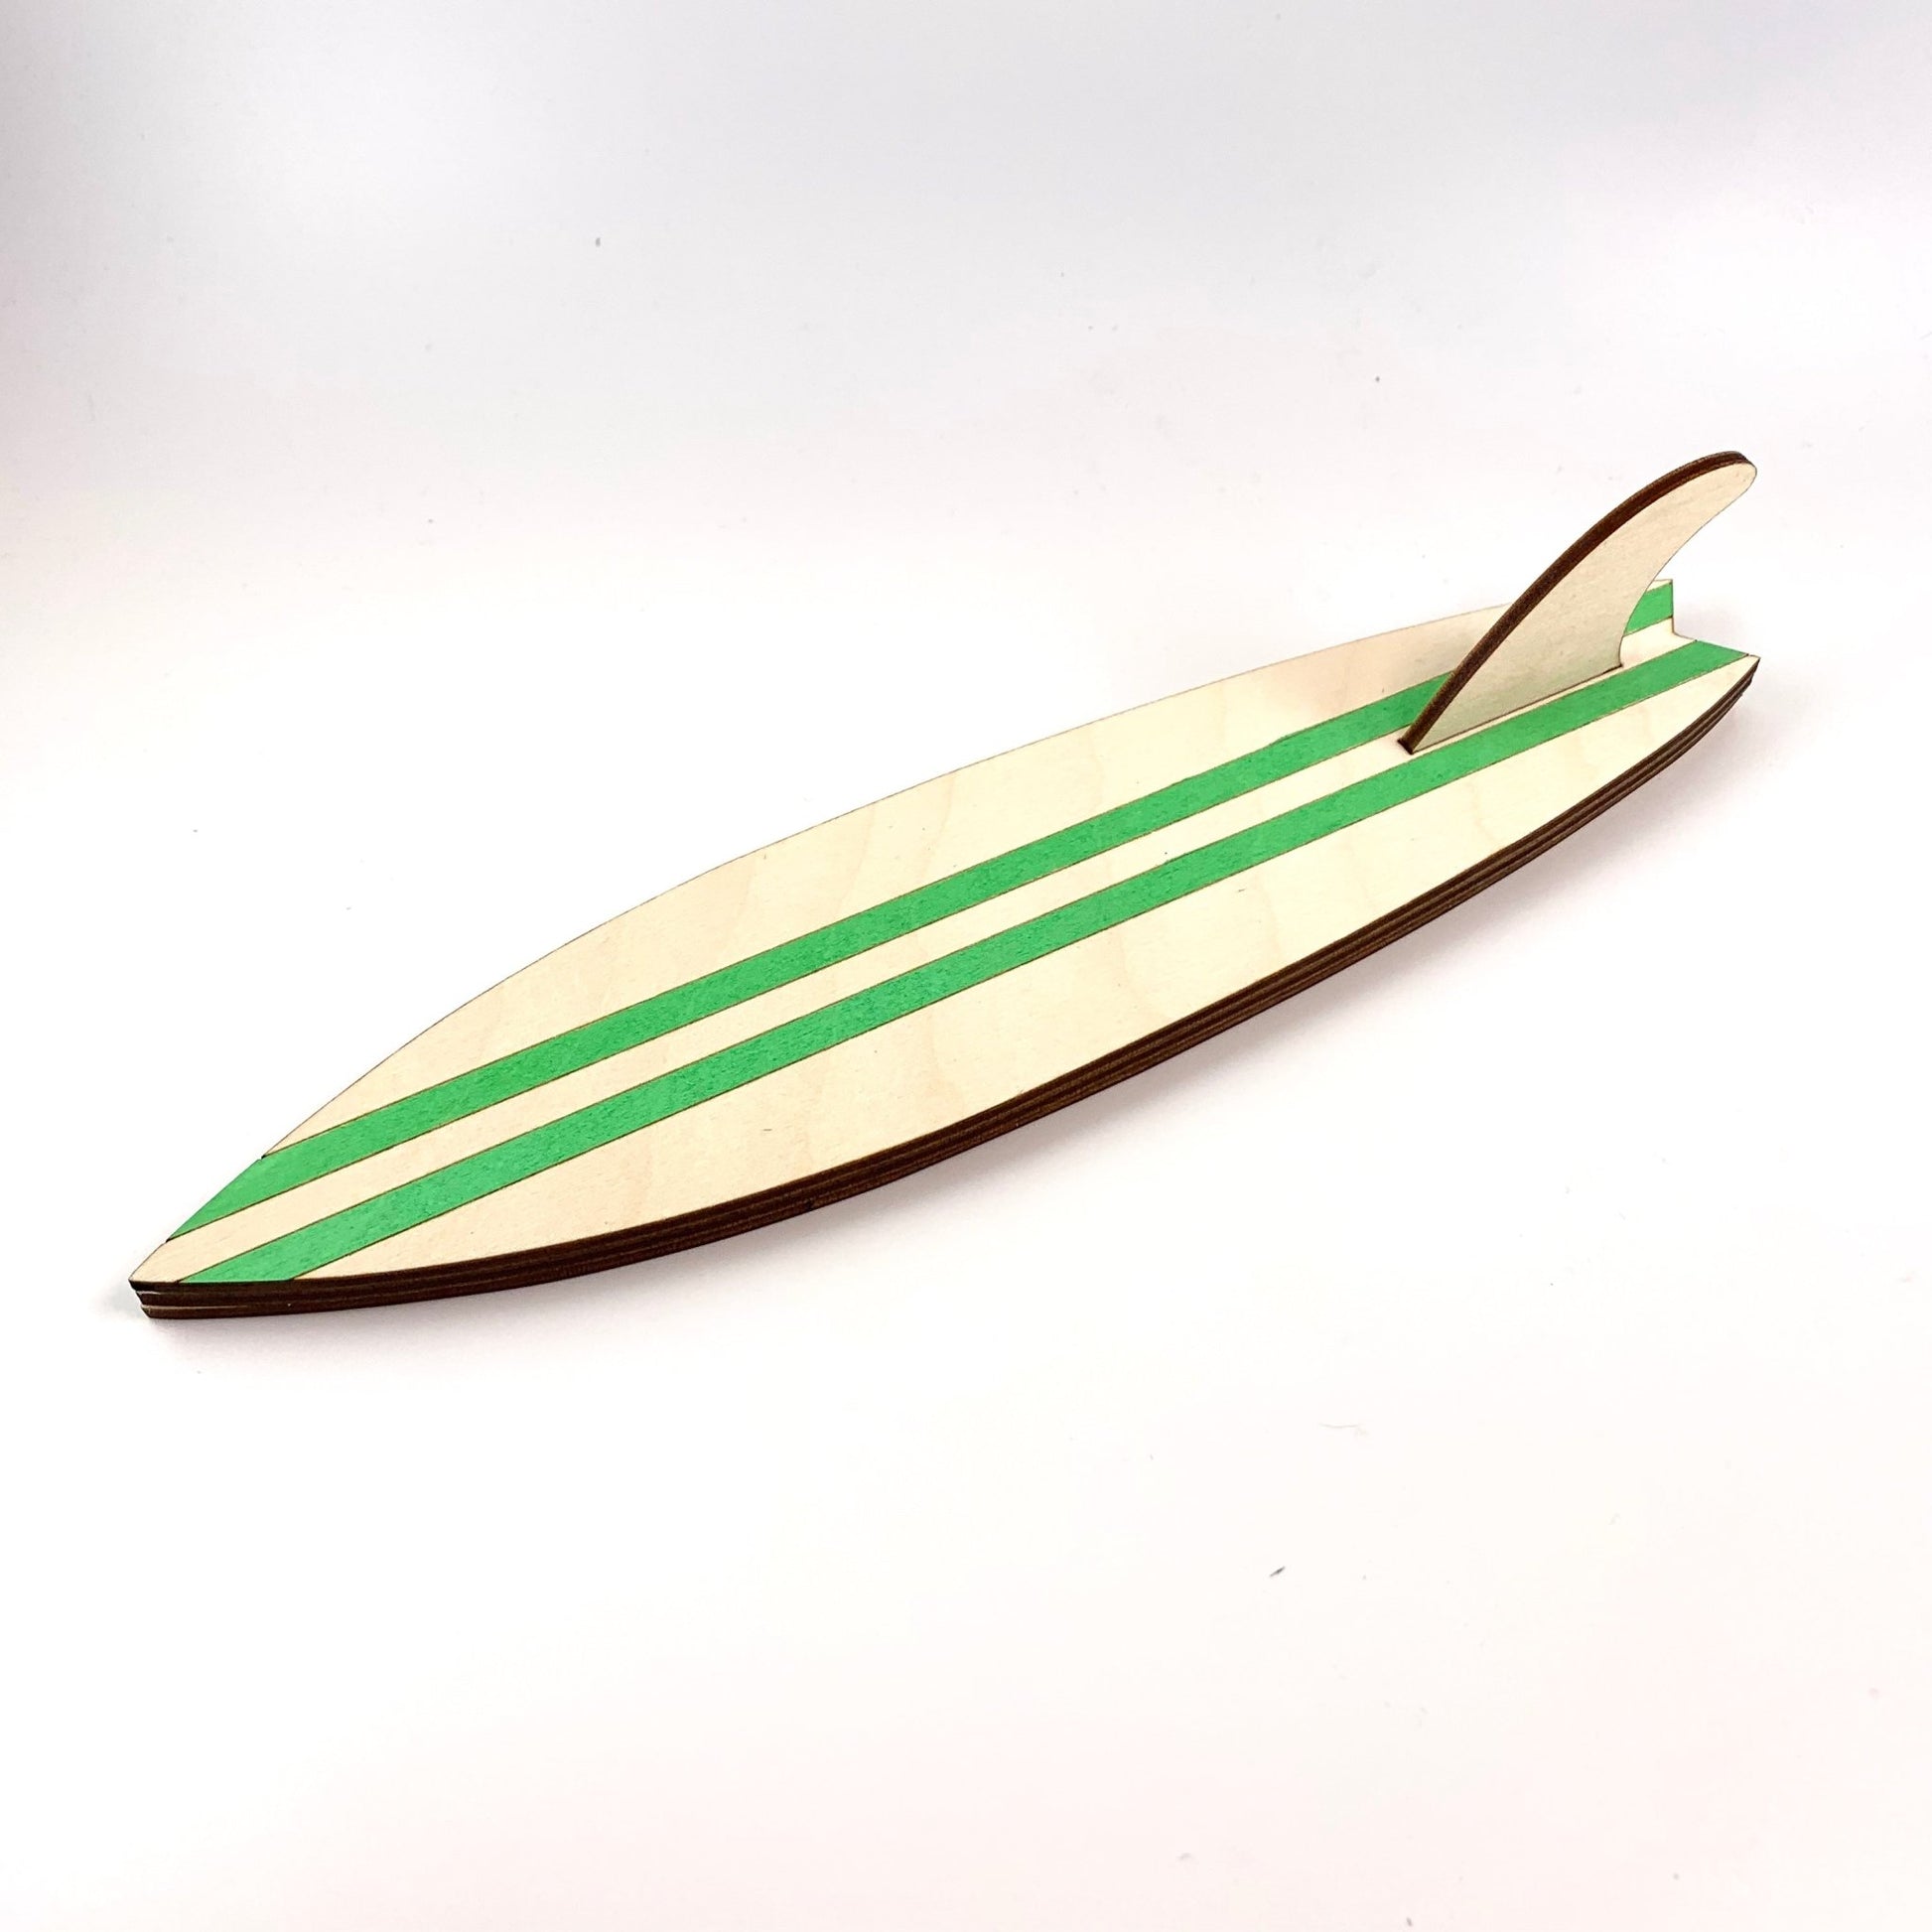 Surfboard Hooks - laser cut and laser engraved birch wood - light green vertical stripes - by LeeMo Designs in Bend, Oregon